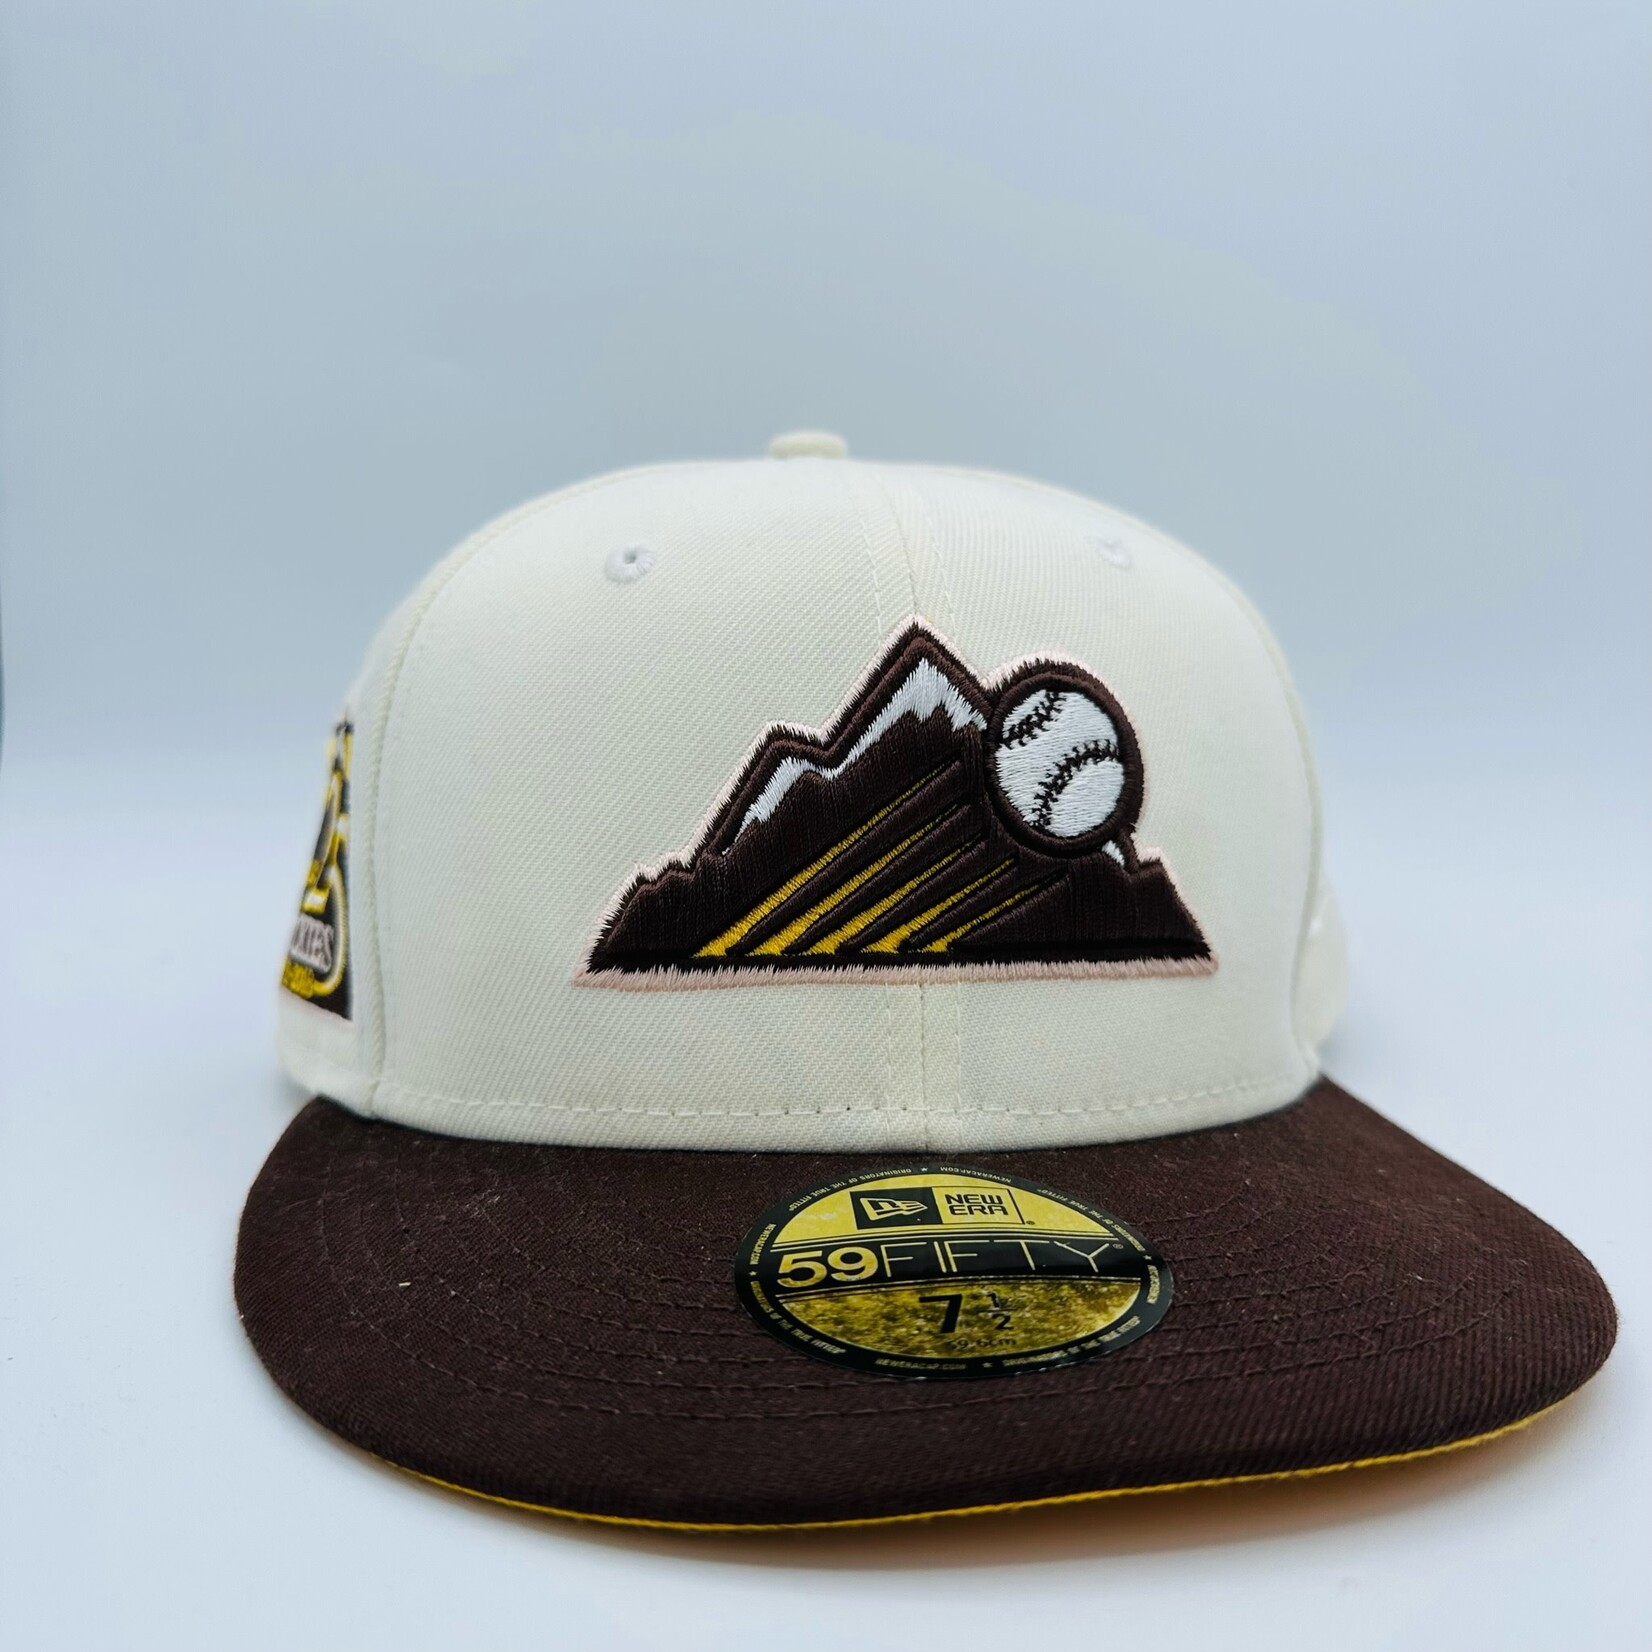 Mission Zero Collectors Rockies Hat